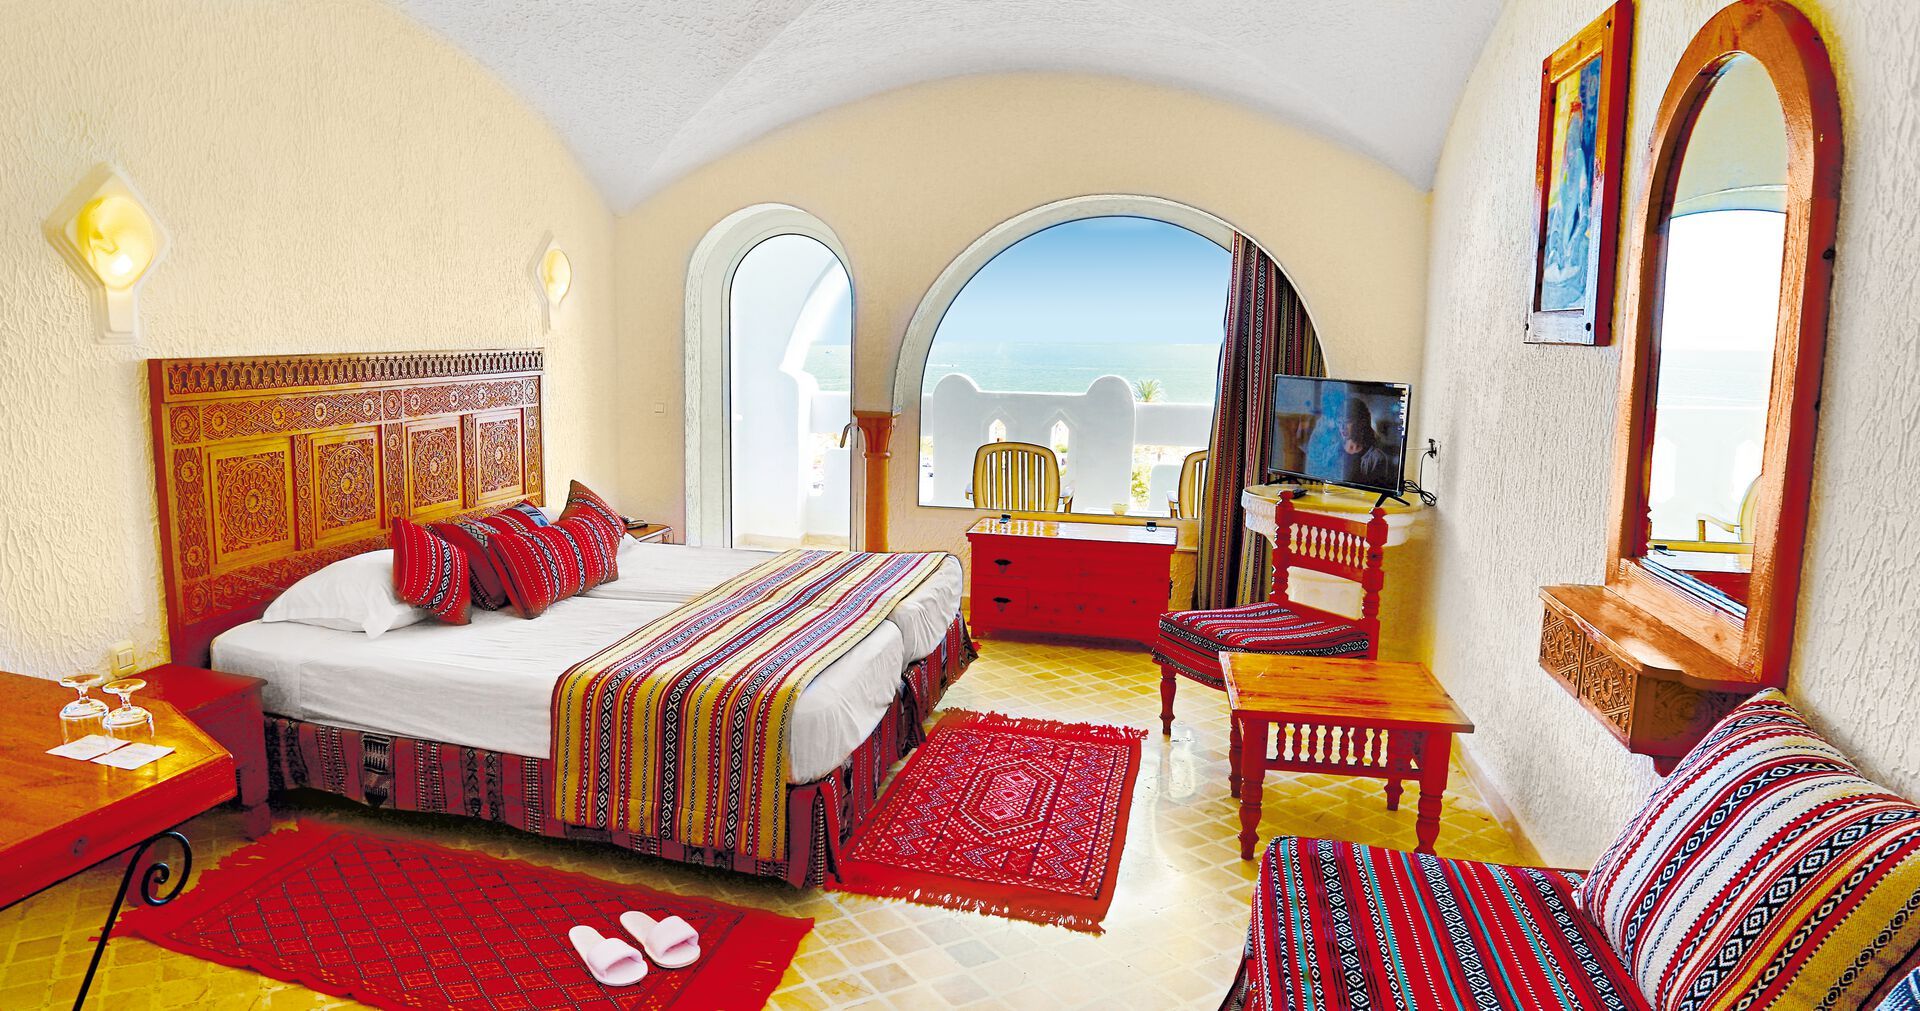 Tunisie - Hammamet - Hôtel Lella Baya 4*